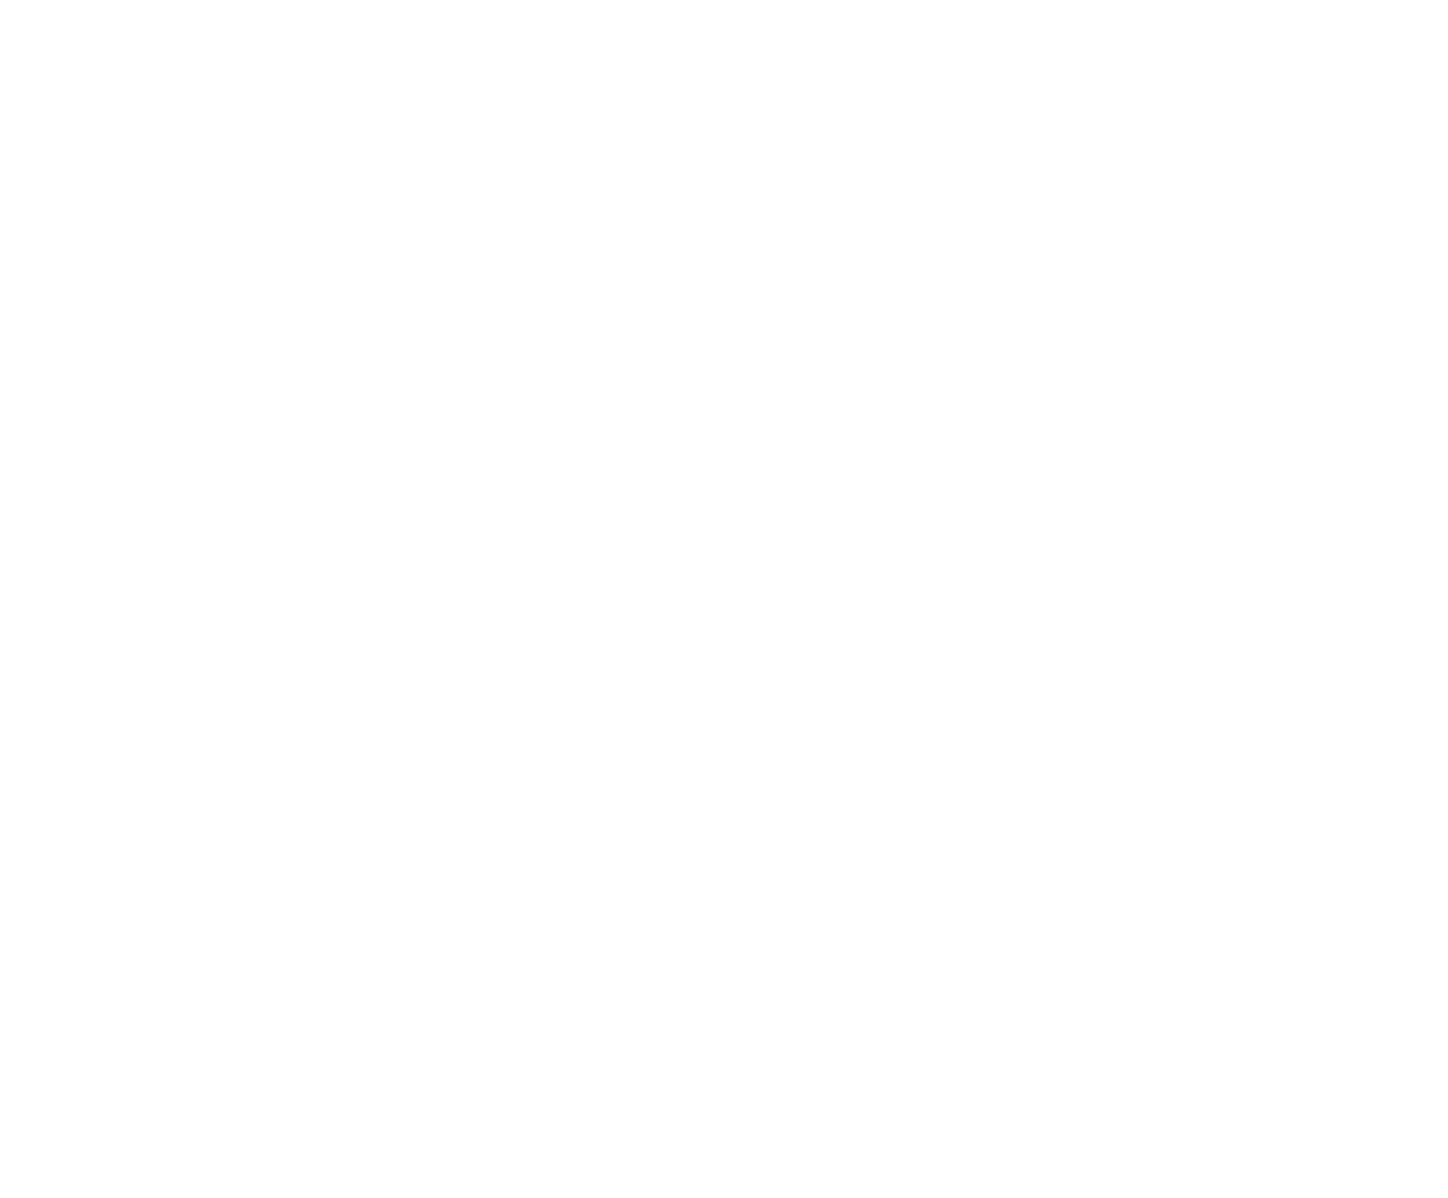 Kingly Brands